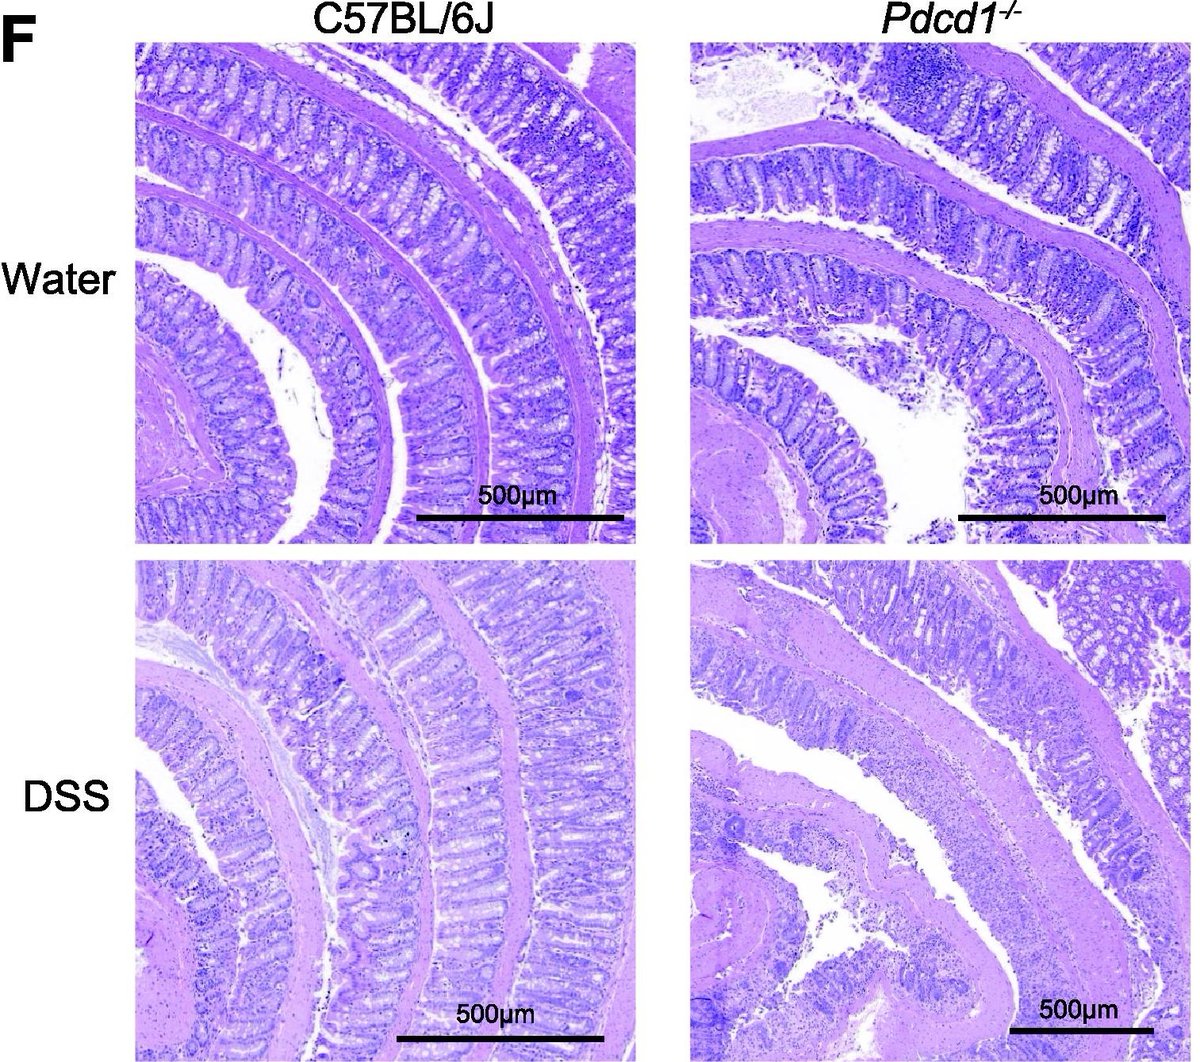 PD-1 regulates ILC3-driven intestinal immunity and homeostasis: mucosalimmunology.org/article/S1933-…